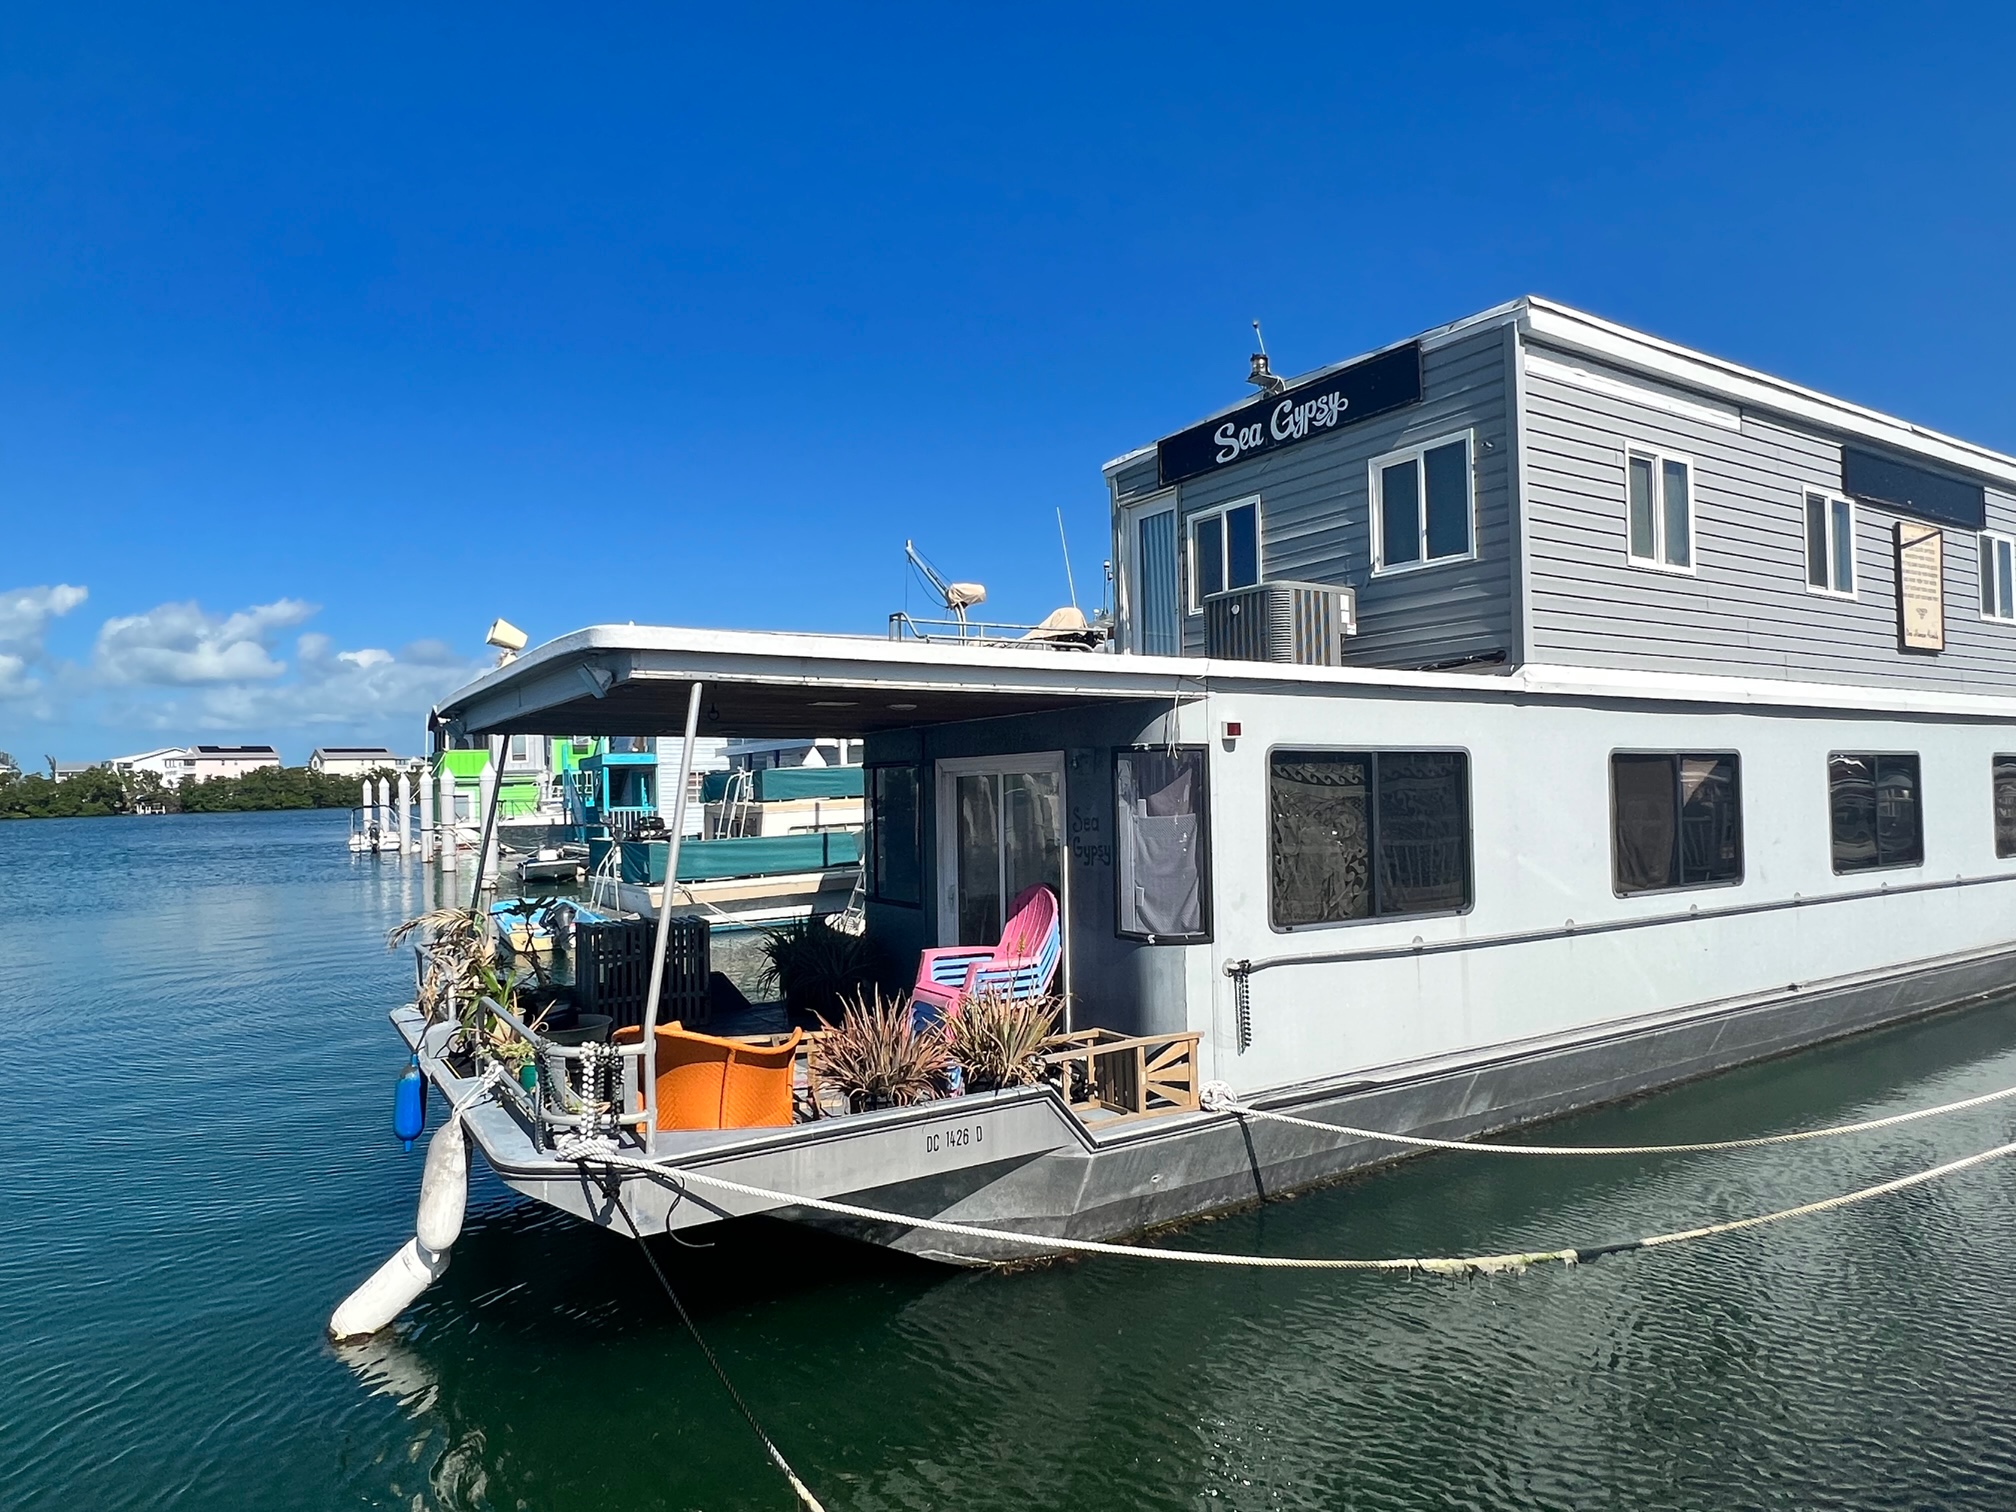 1996 64 foot Sunstar Houseboat Houseboat for sale in Key West, FL - image 1 